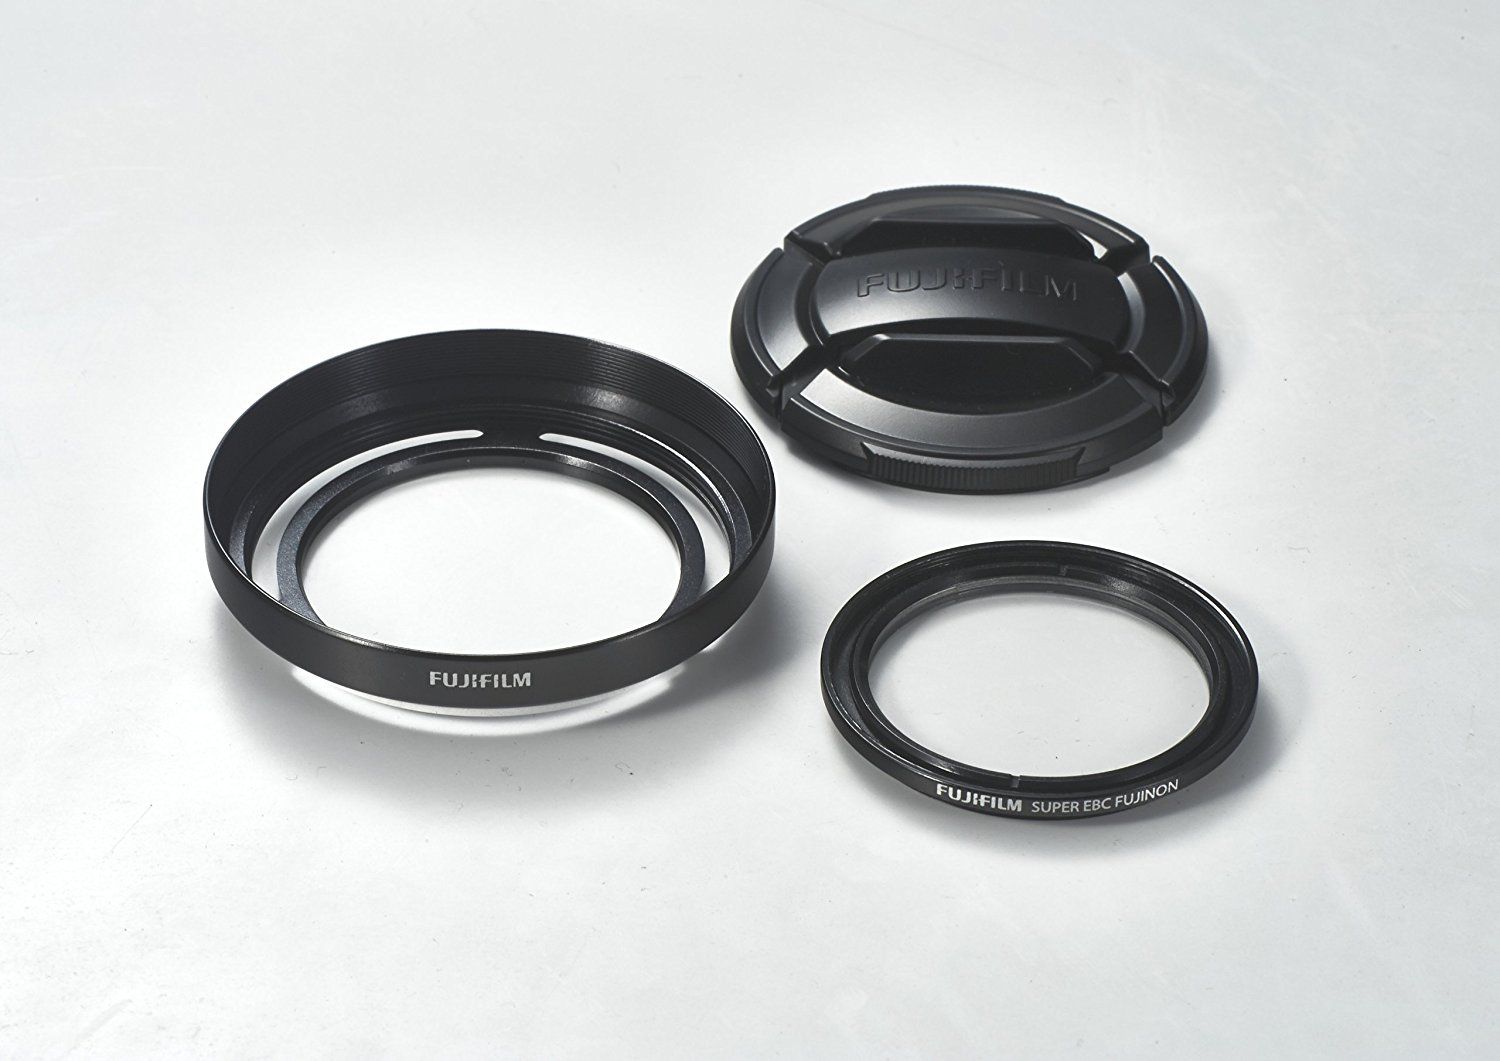 Fujifilm X20 Lens Hood and Filter Set (Black) Price in